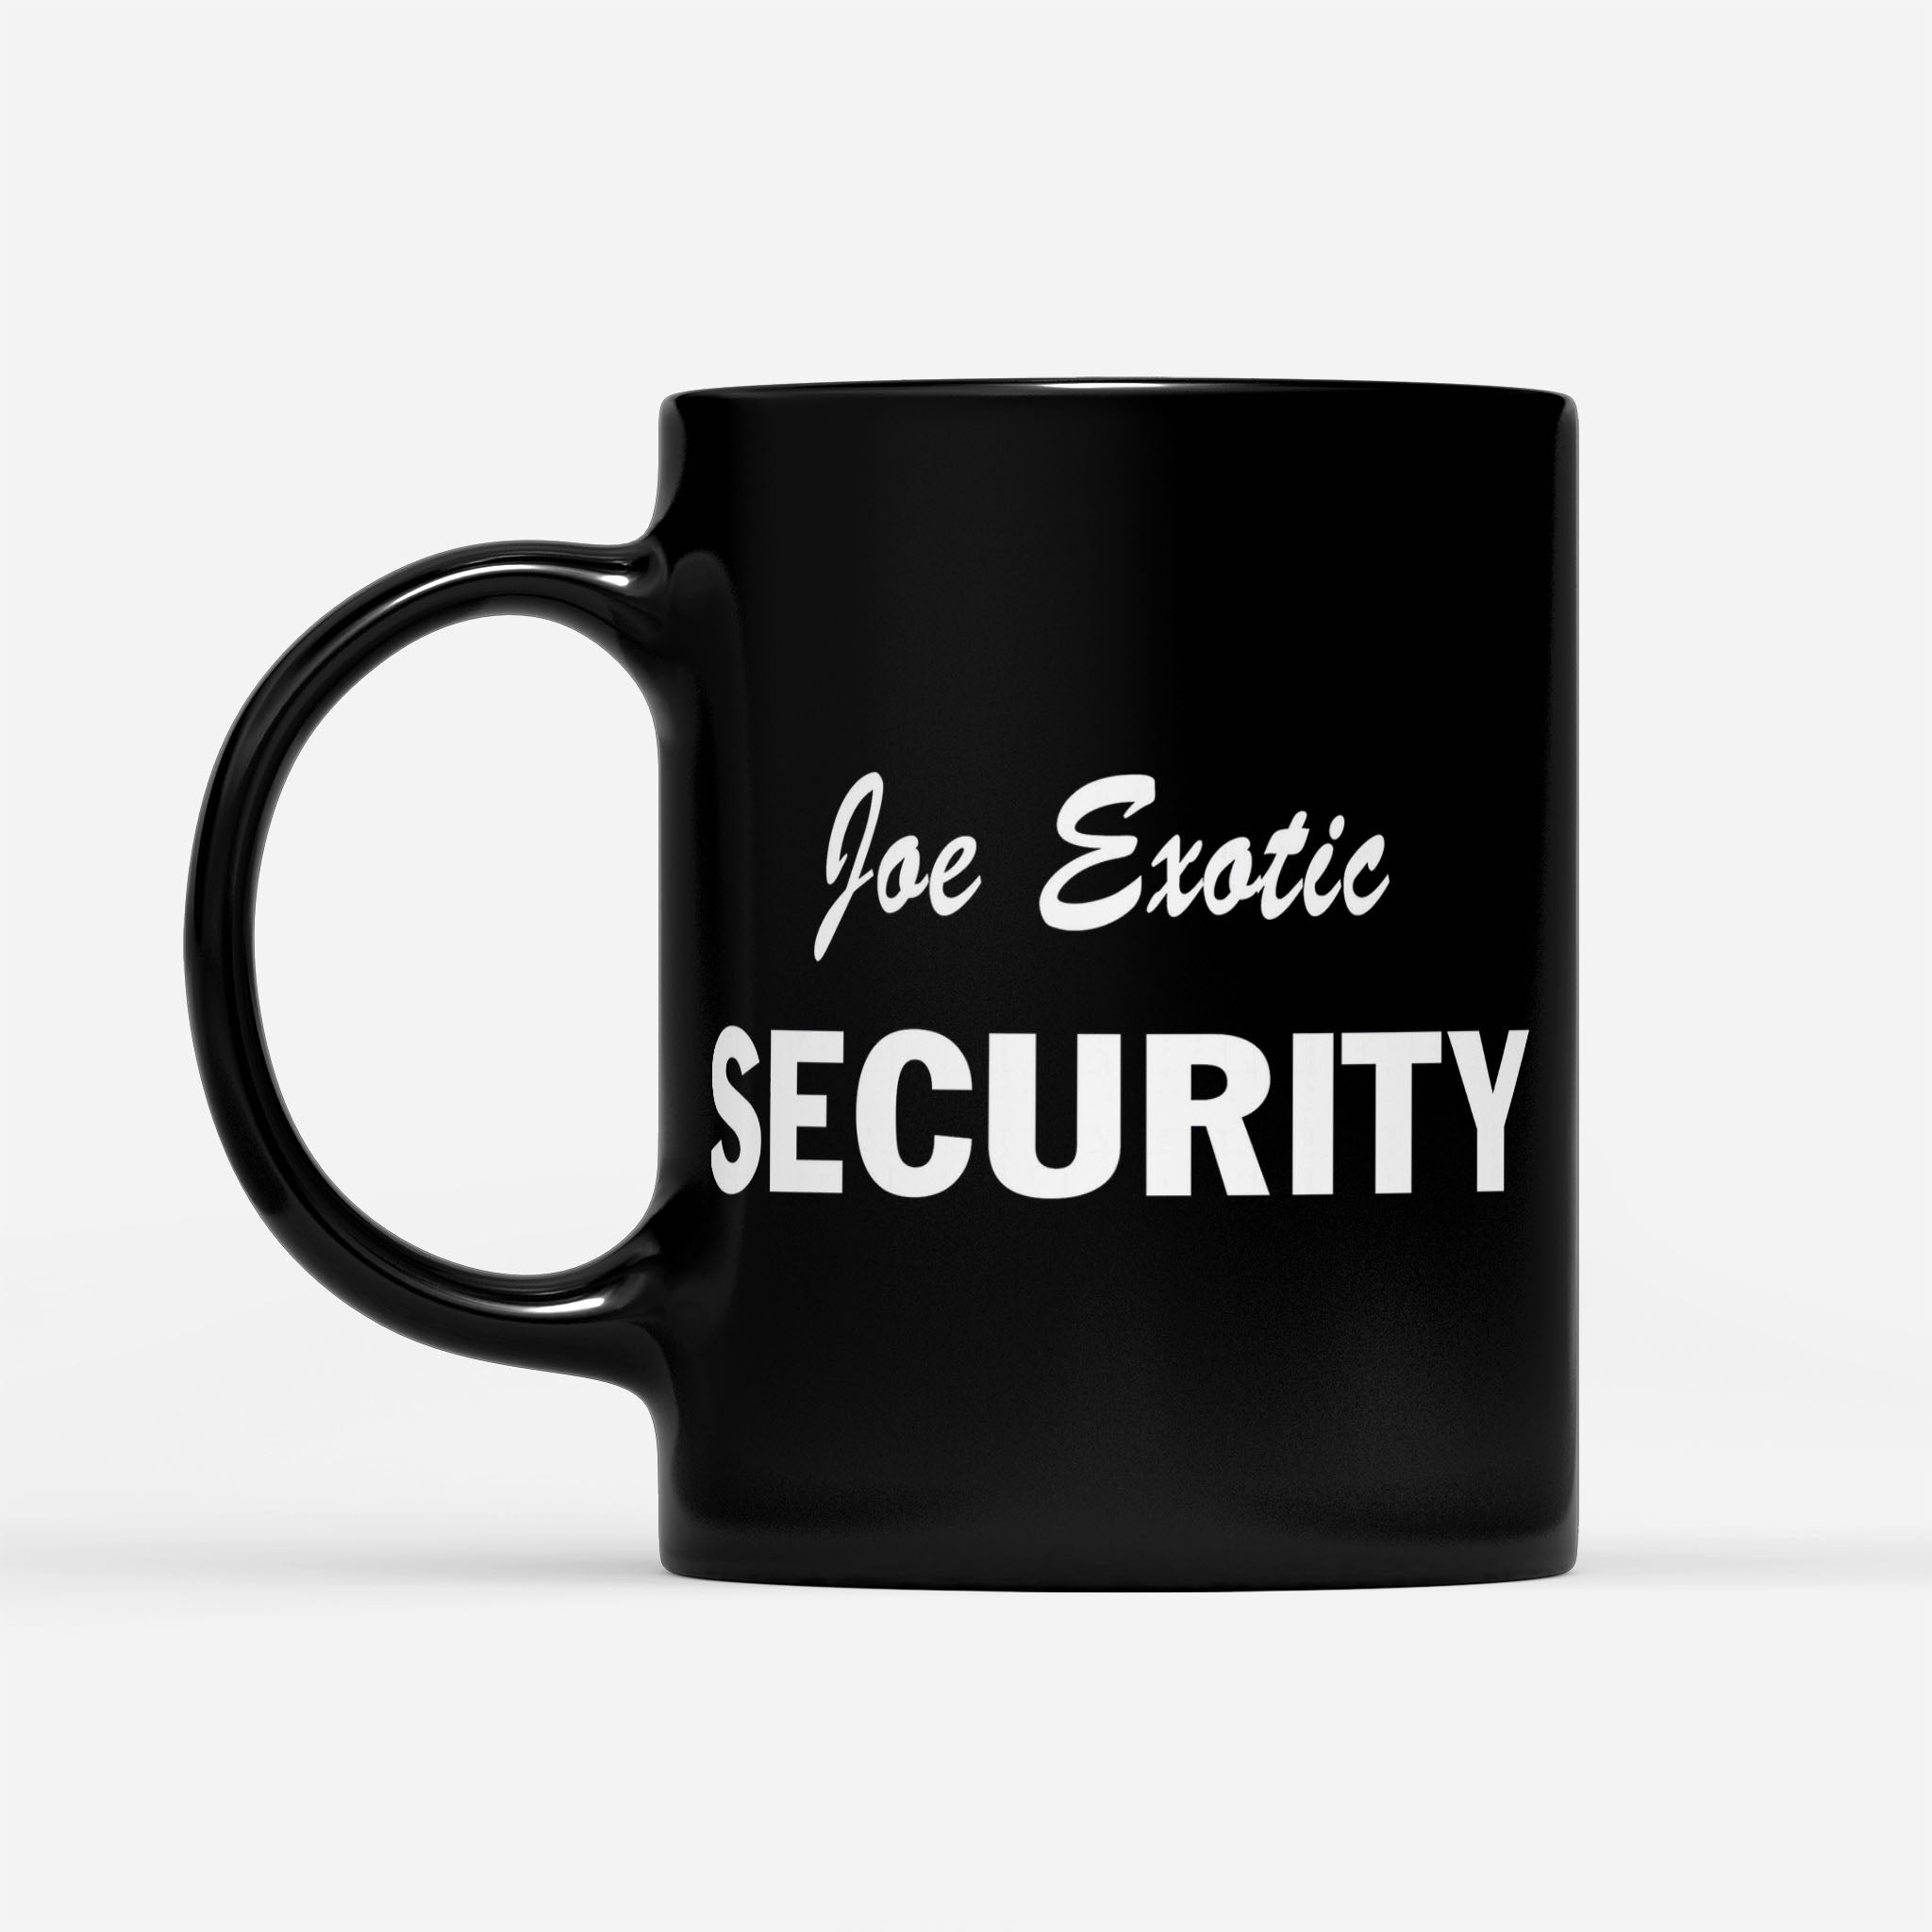 Joe Exotic Security - Black Mug